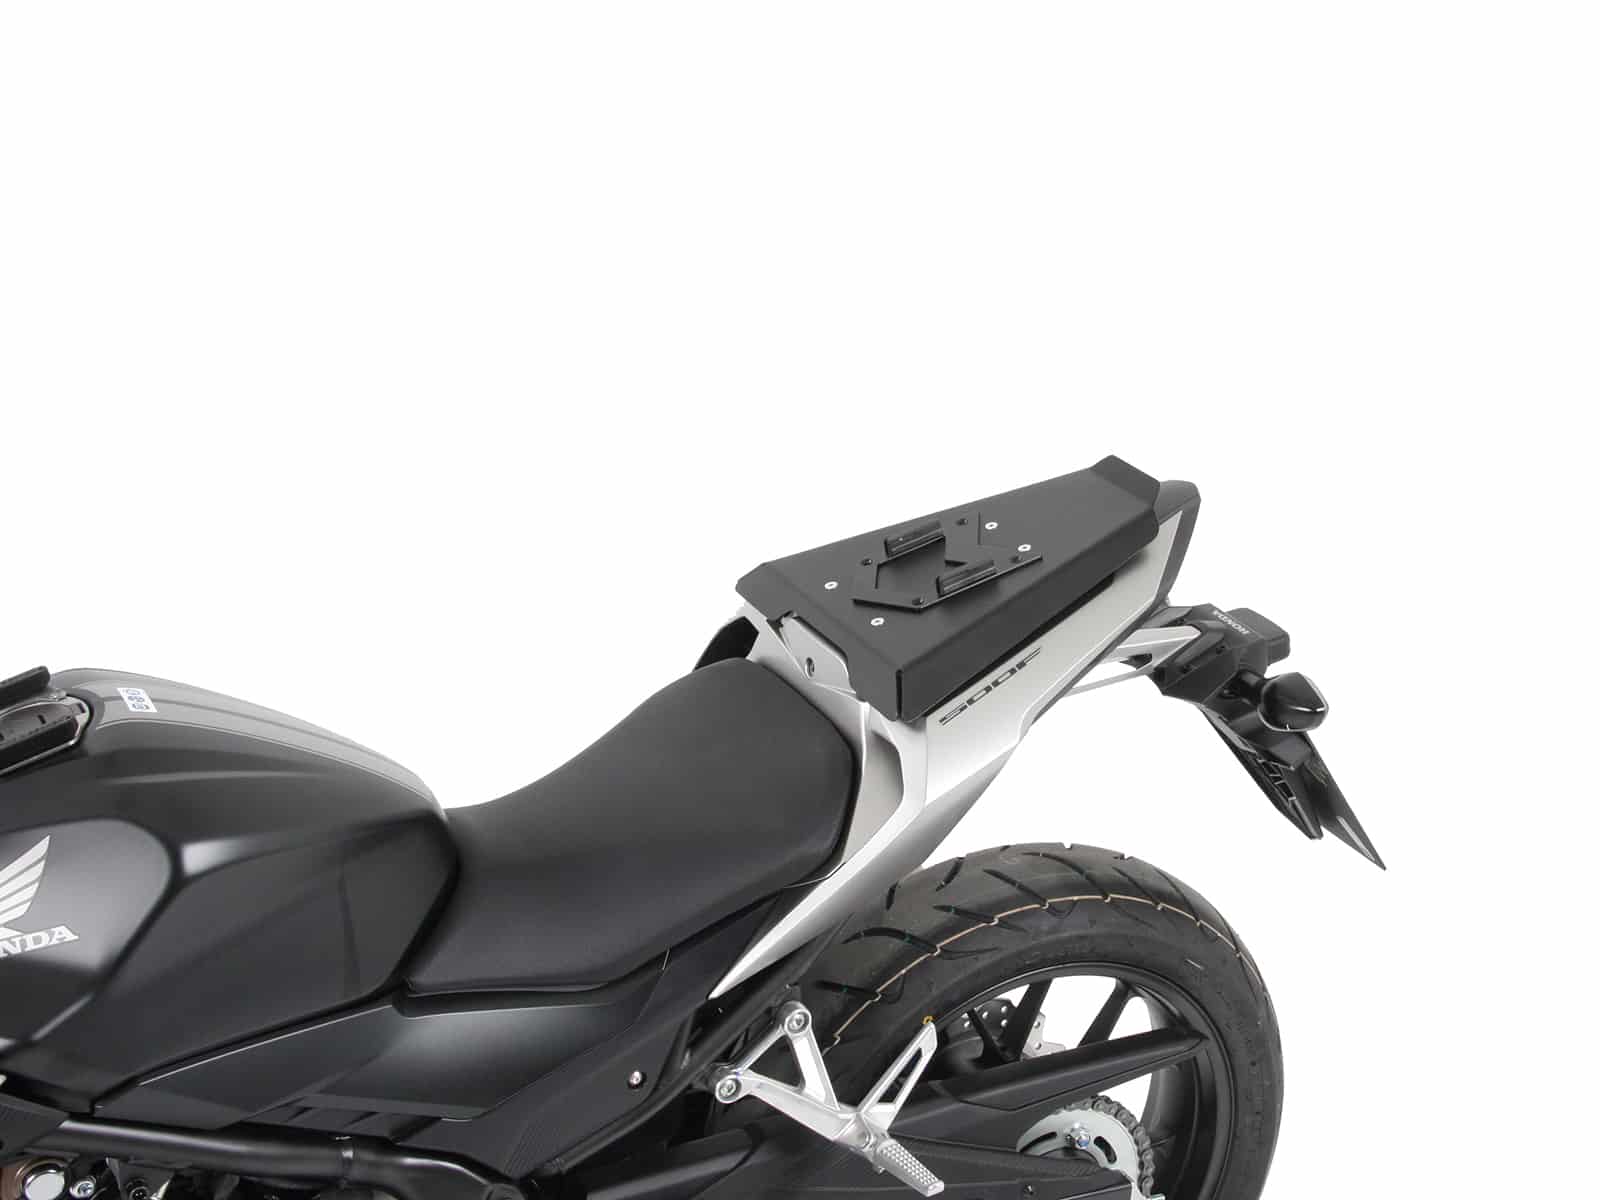 XL Motorcycle Cover For Honda CBR 1000F 1000RR 1100XX 125R 250R 300R 500R 650F 